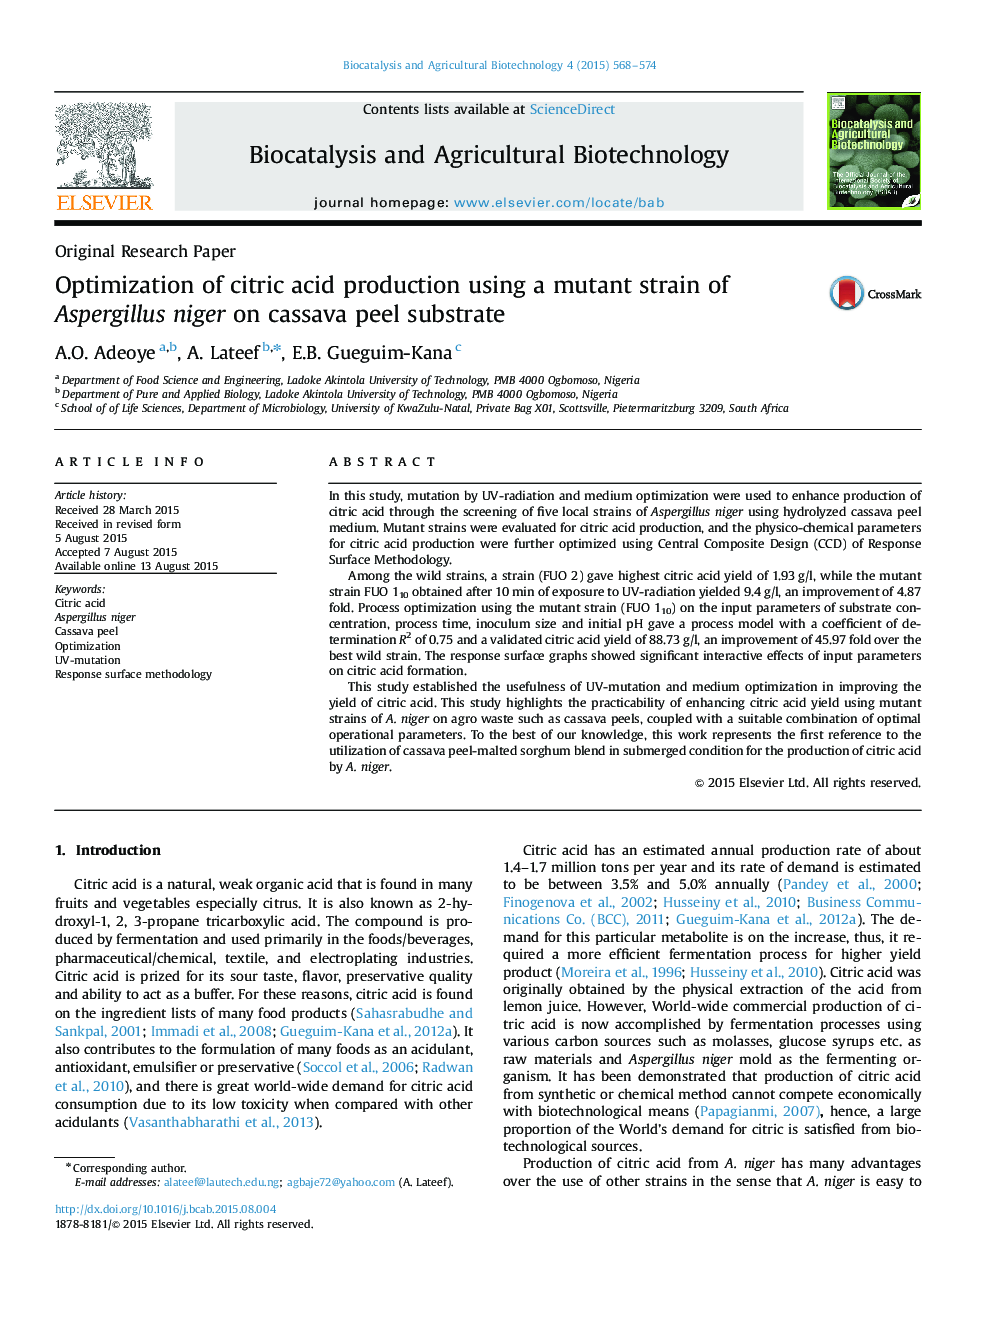 Optimization of citric acid production using a mutant strain of Aspergillus niger on cassava peel substrate